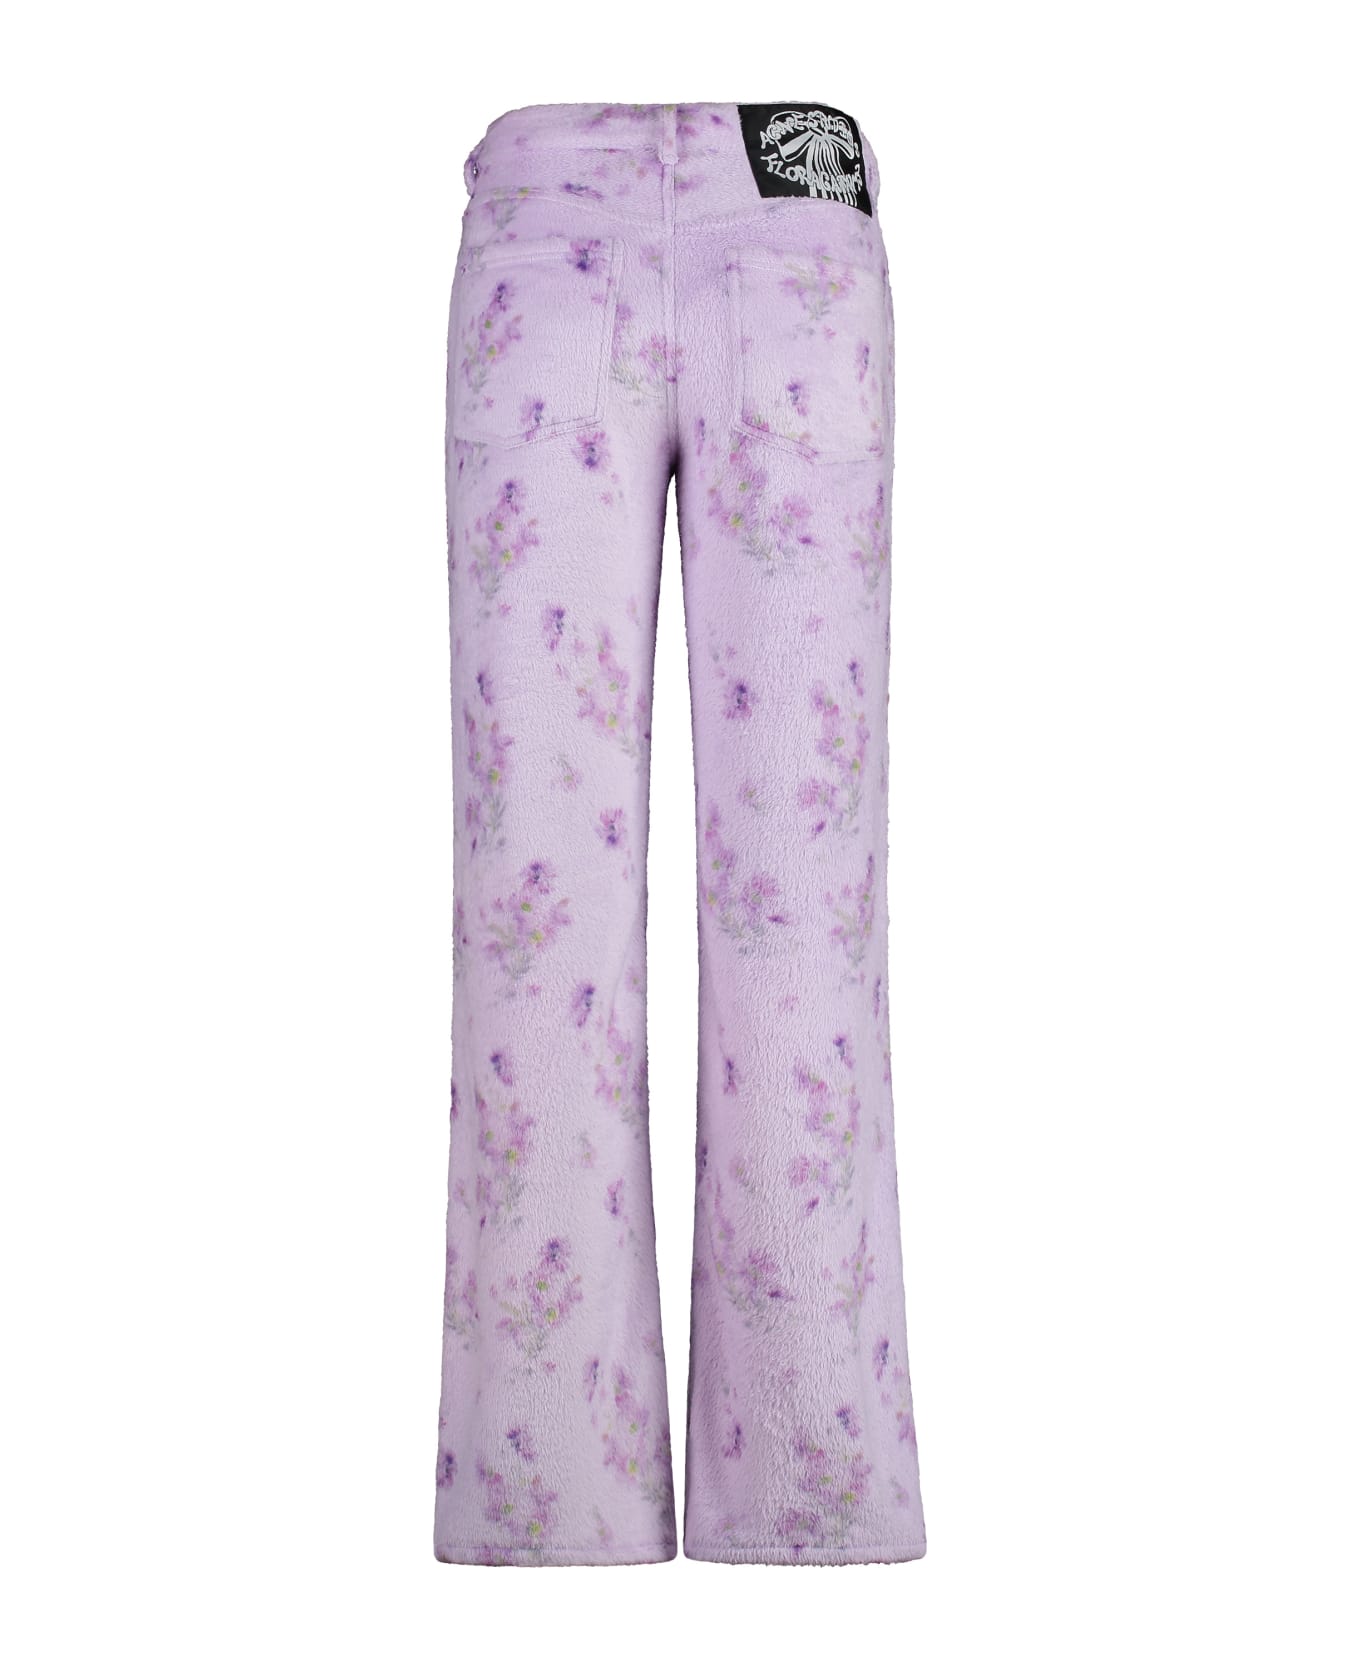 Acne Studios Technical Fabric Pants - Lilac